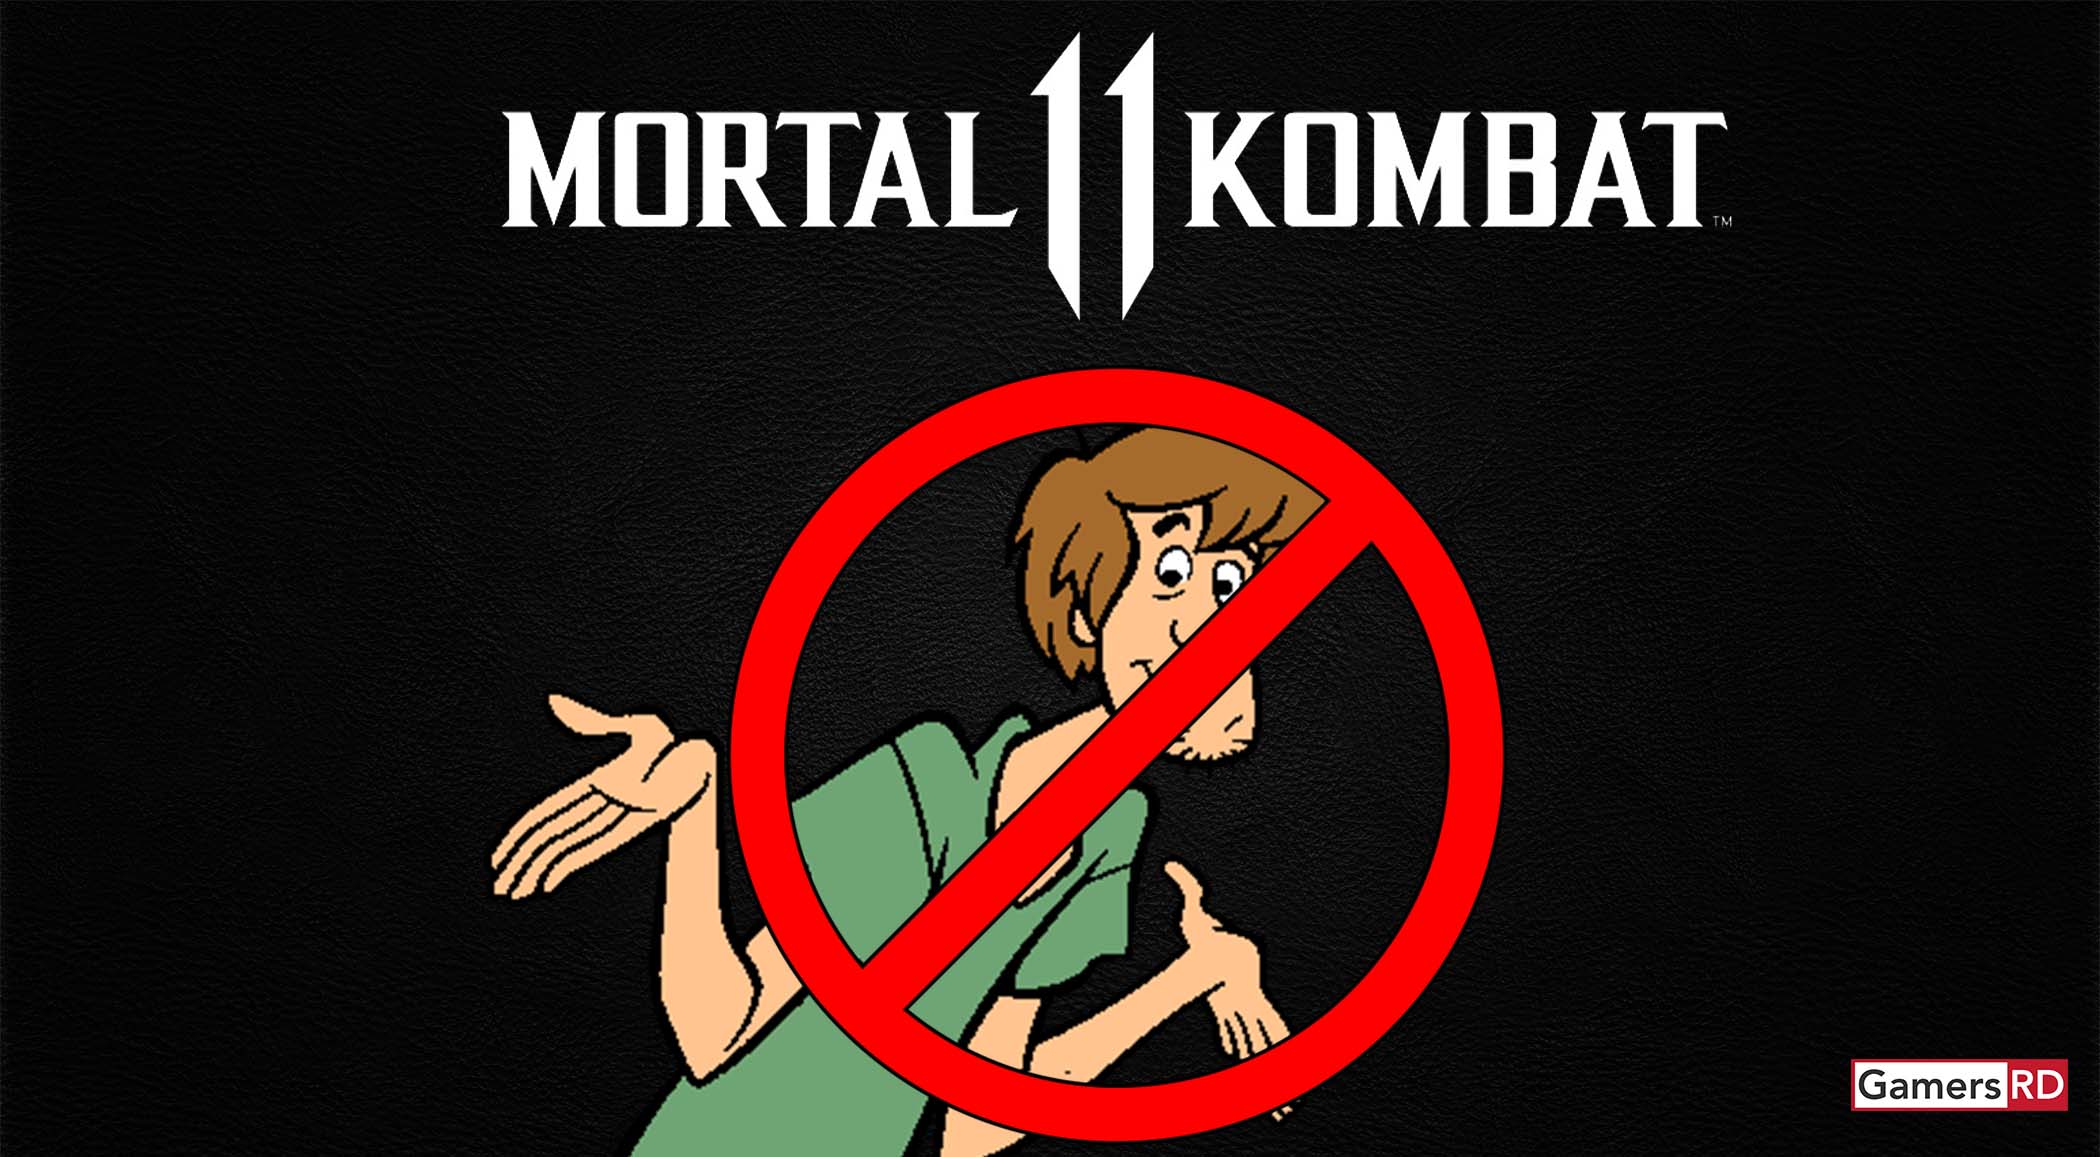 NetherRealm,confirma que Shaggy, no estará en Mortal Kombat 11, GamersRD